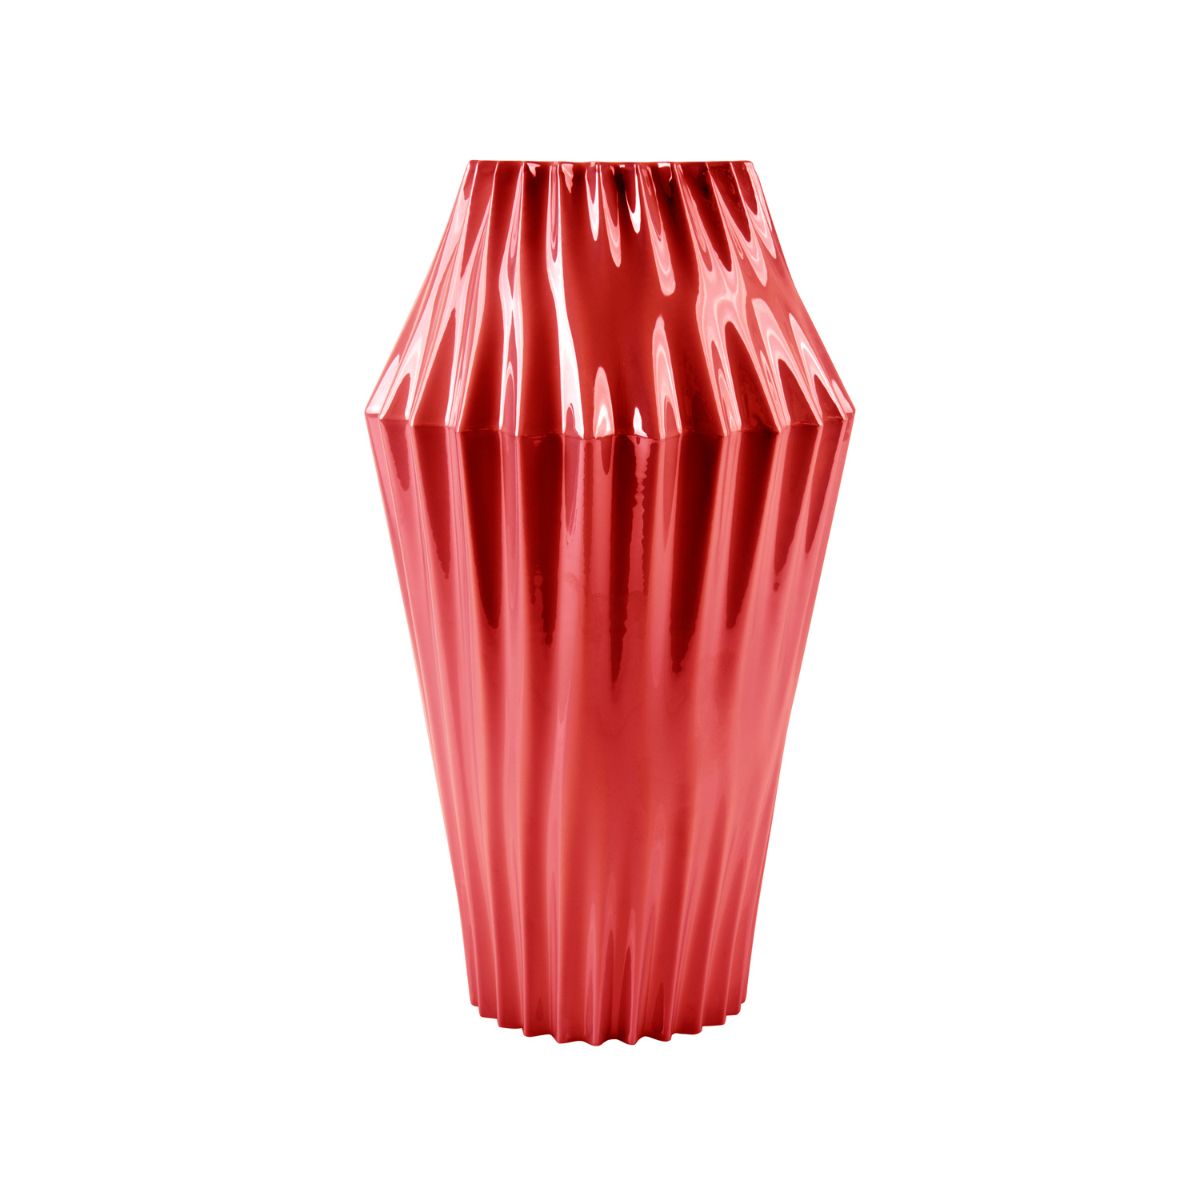 Vertigo Medium Vase - Pearly Red